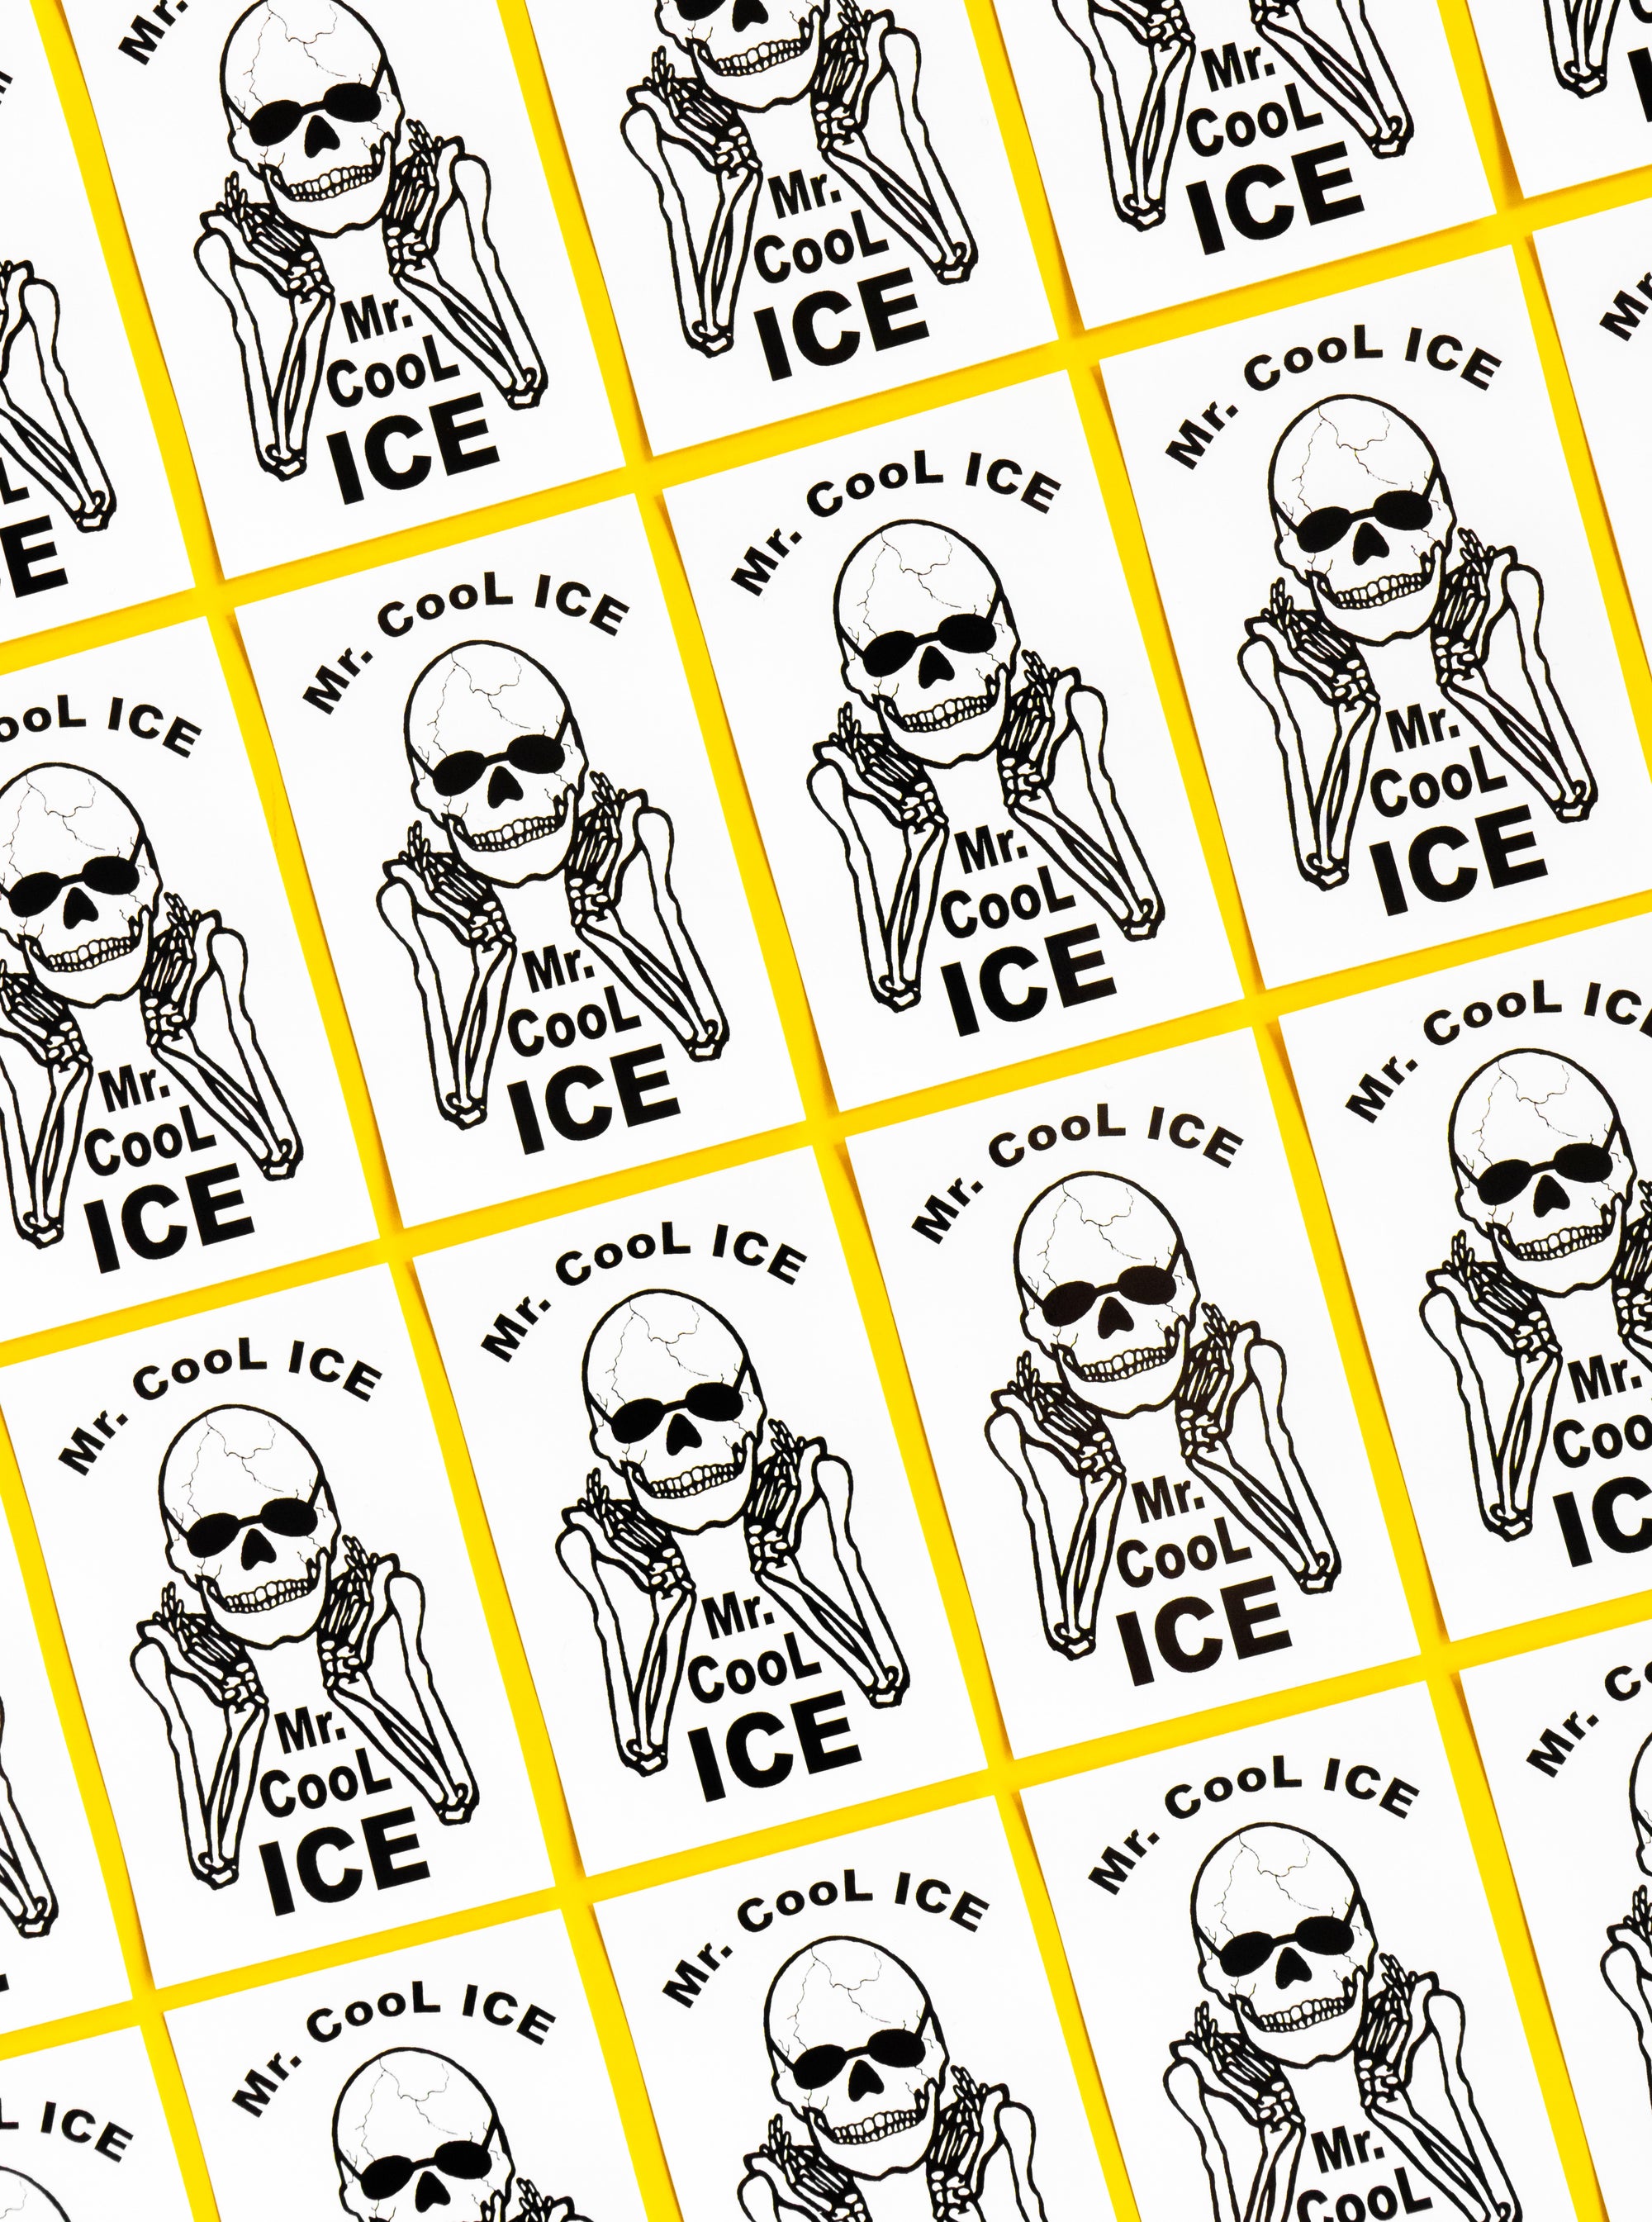 "Mr. Cool Ice" Bumper Sticker